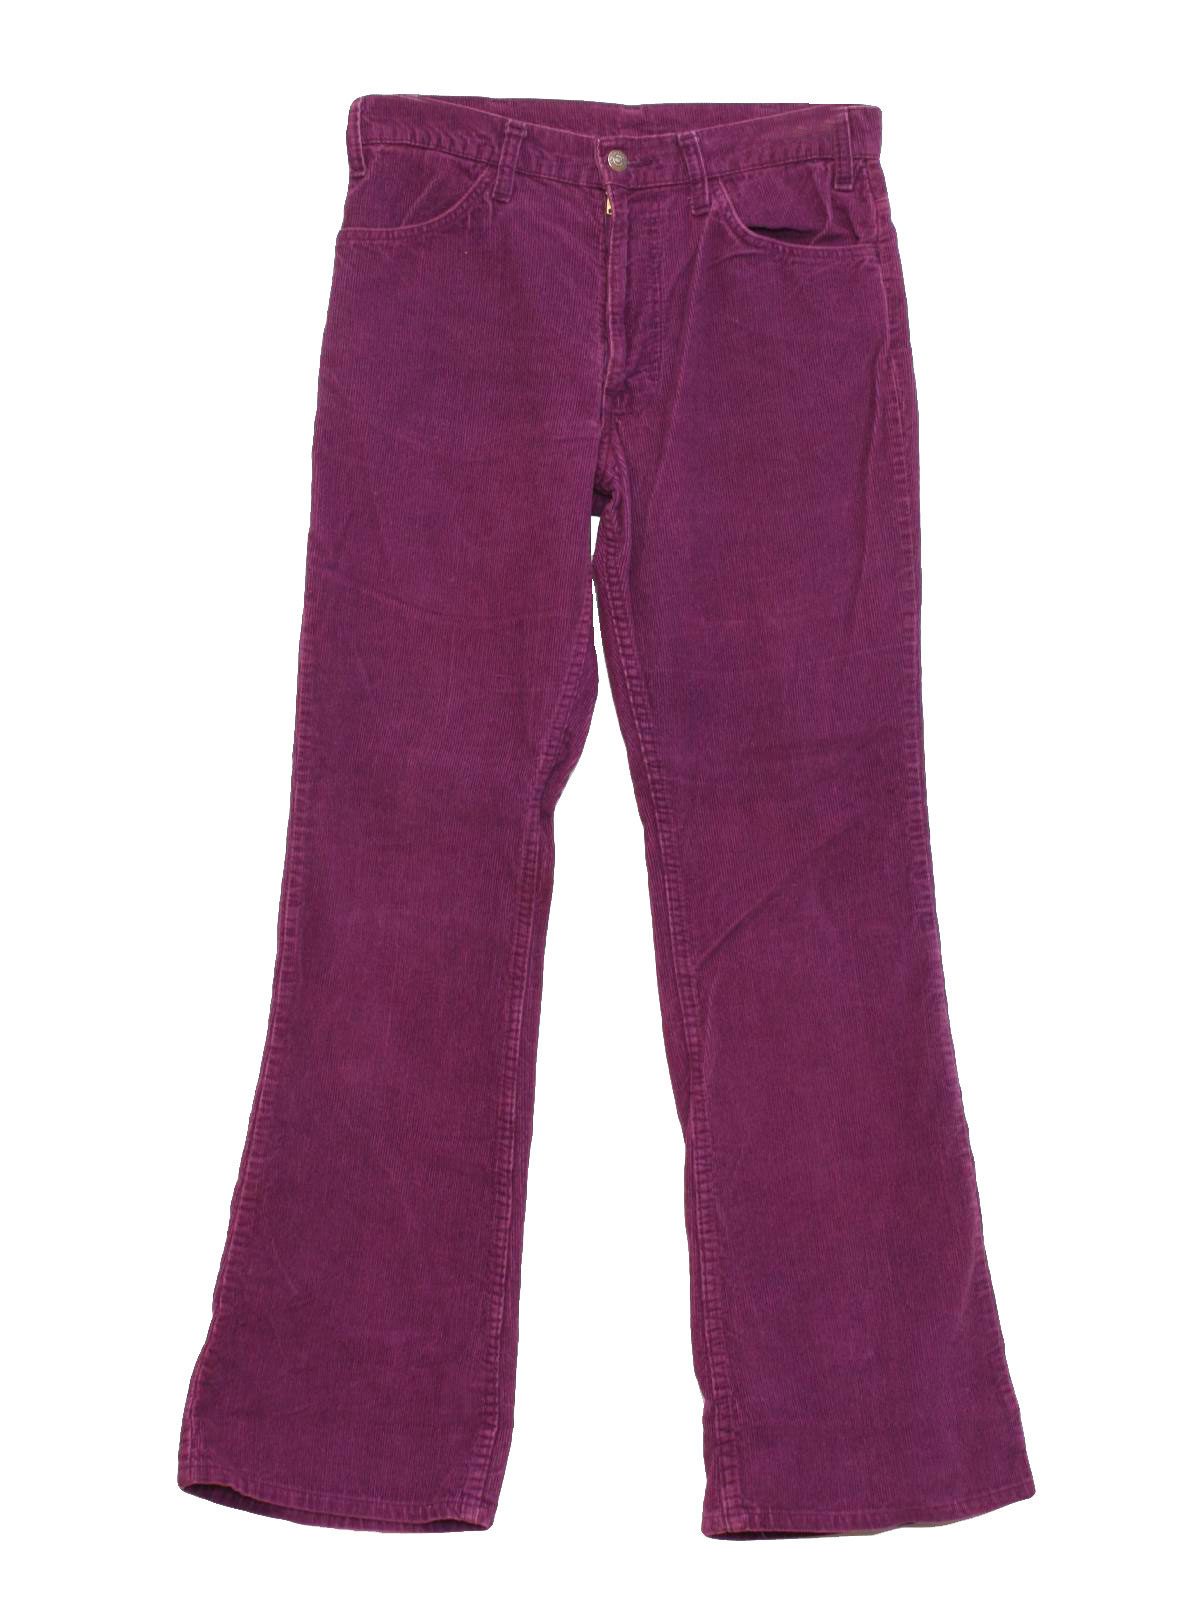 1960's Retro Flared Pants / Flares: Late 60s -Levis- Mens plum cotton ...